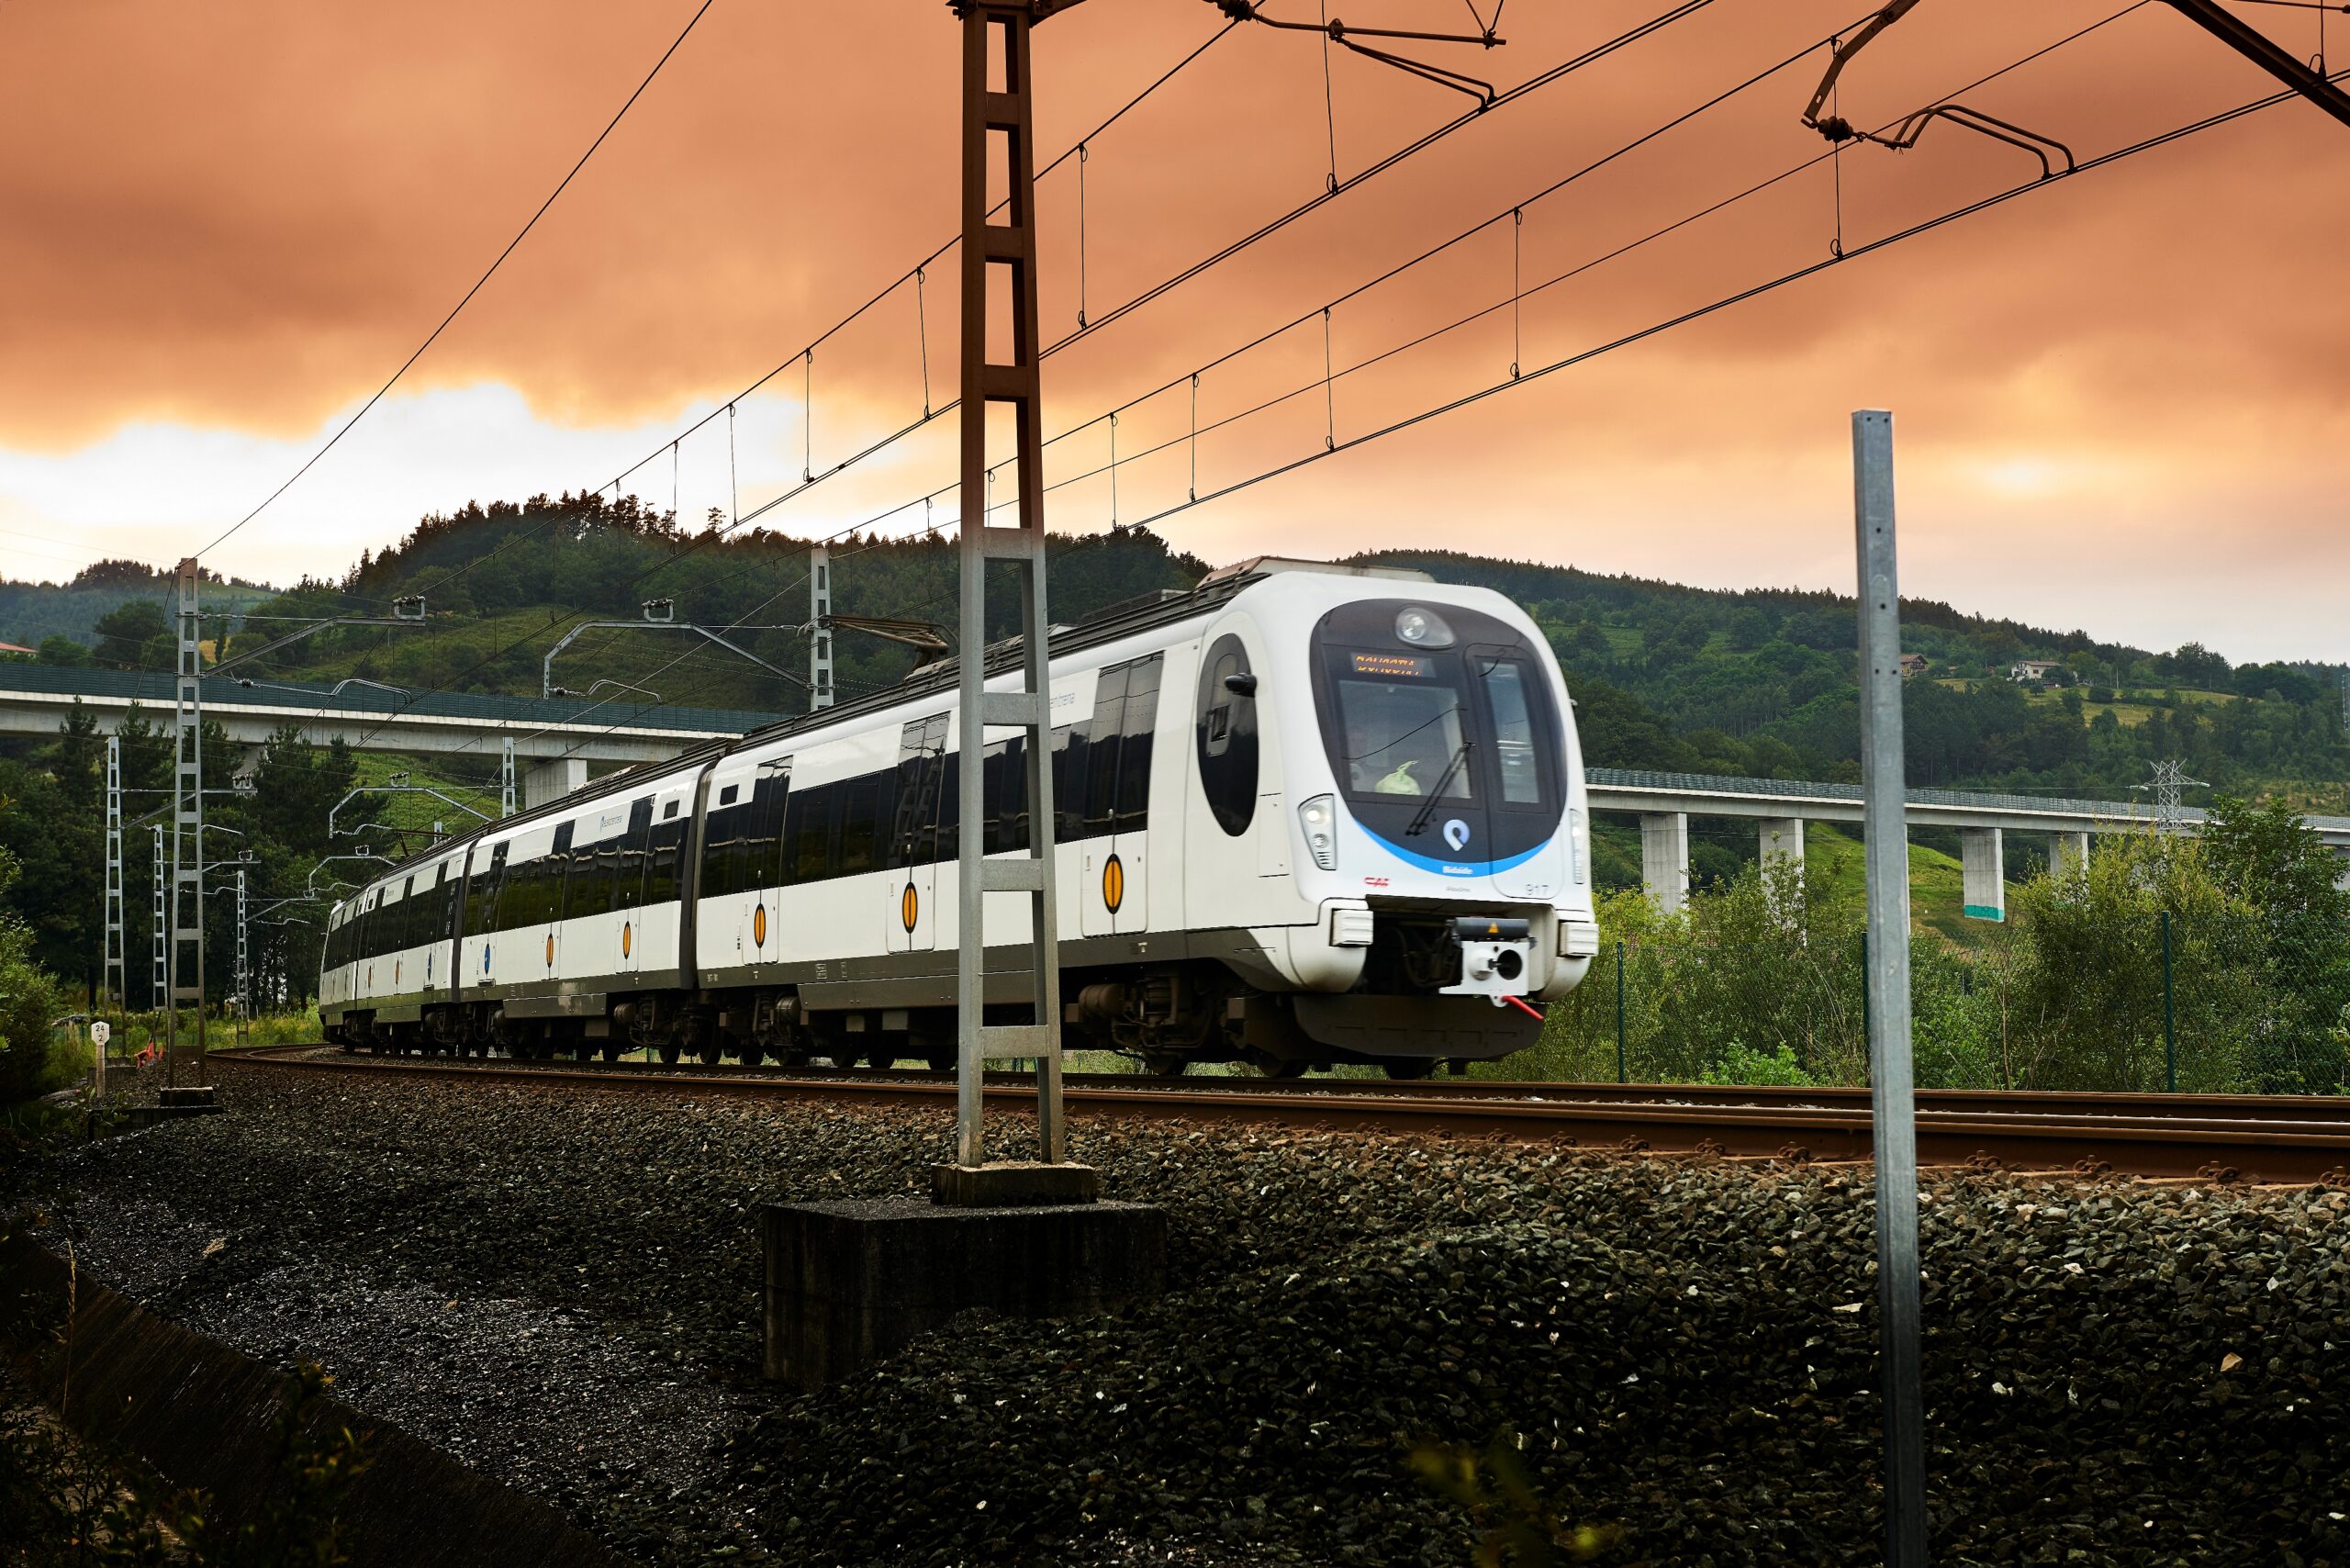 Euskotren is the primary rail transportation operator in Euskadi, Spain